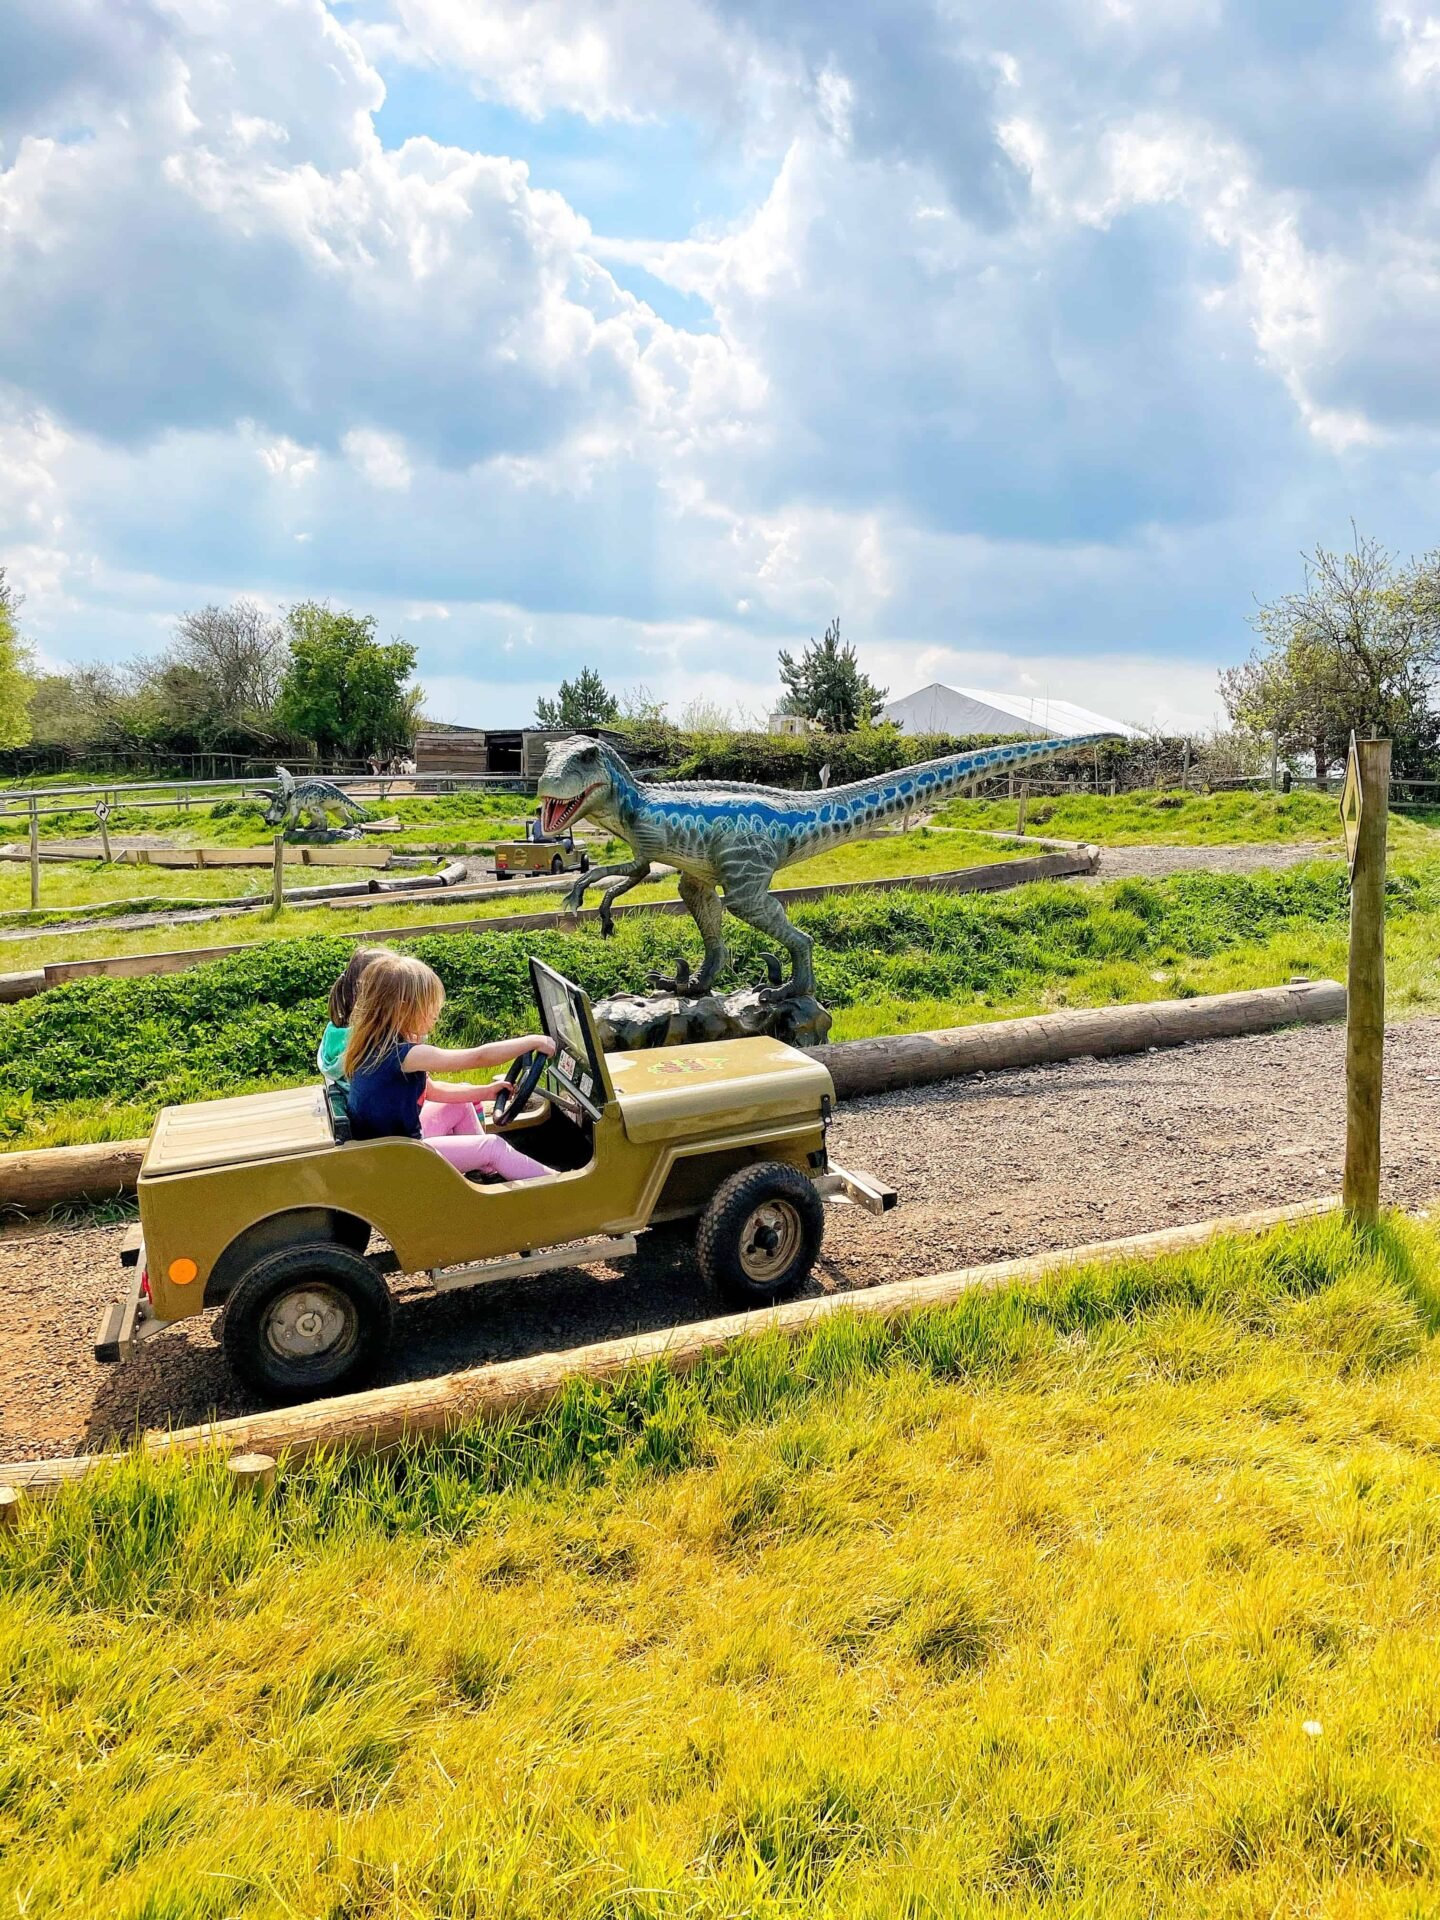 Avon Valley Adventure and wildlife park dinosaur jeep